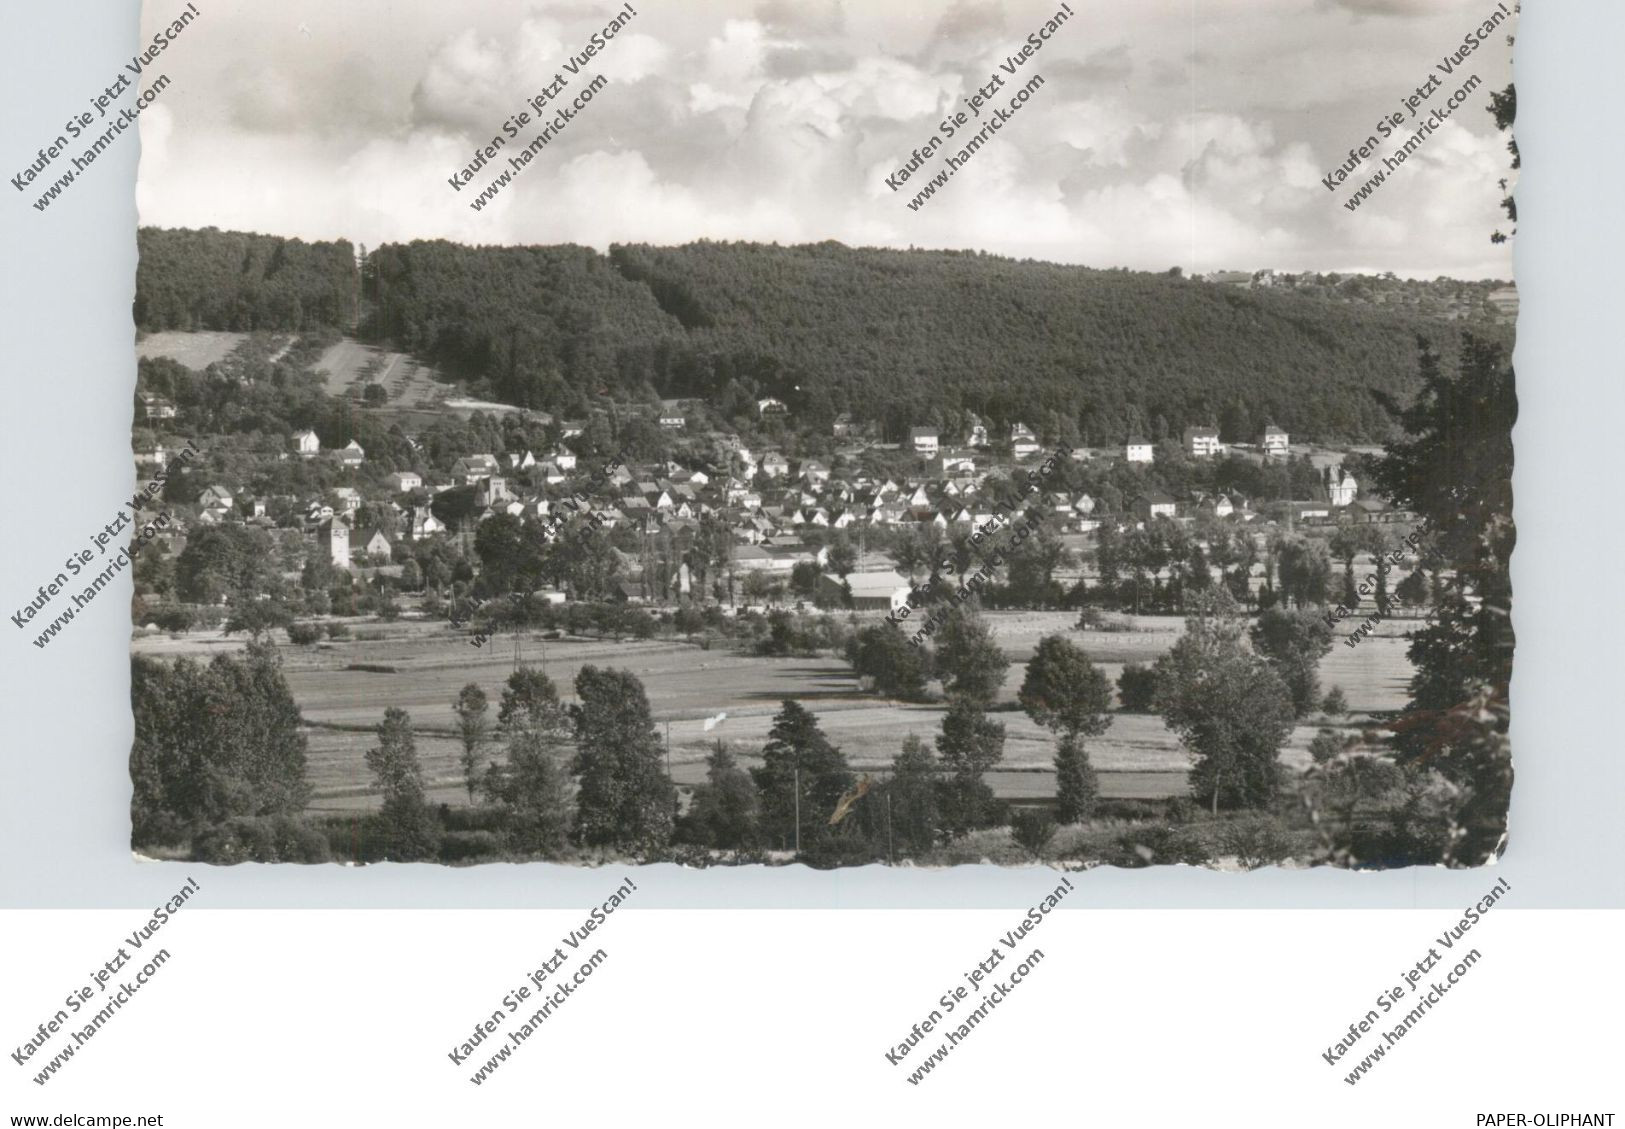 6123  BAD KÖNIG, Gesamtansicht 1957 - Bad Koenig